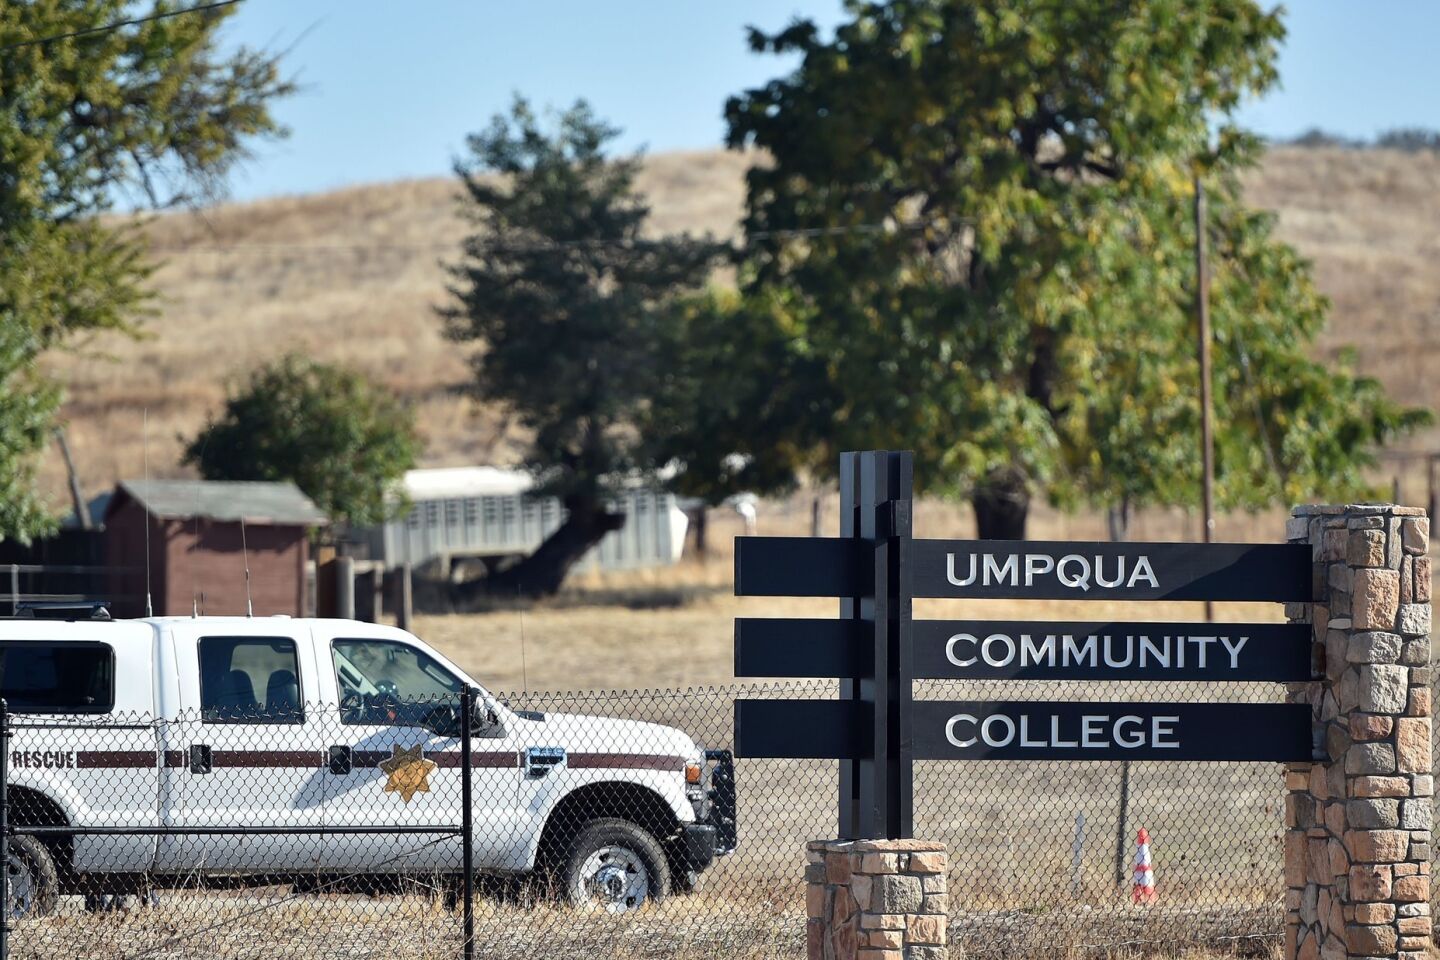 Umpqua Community College shooting